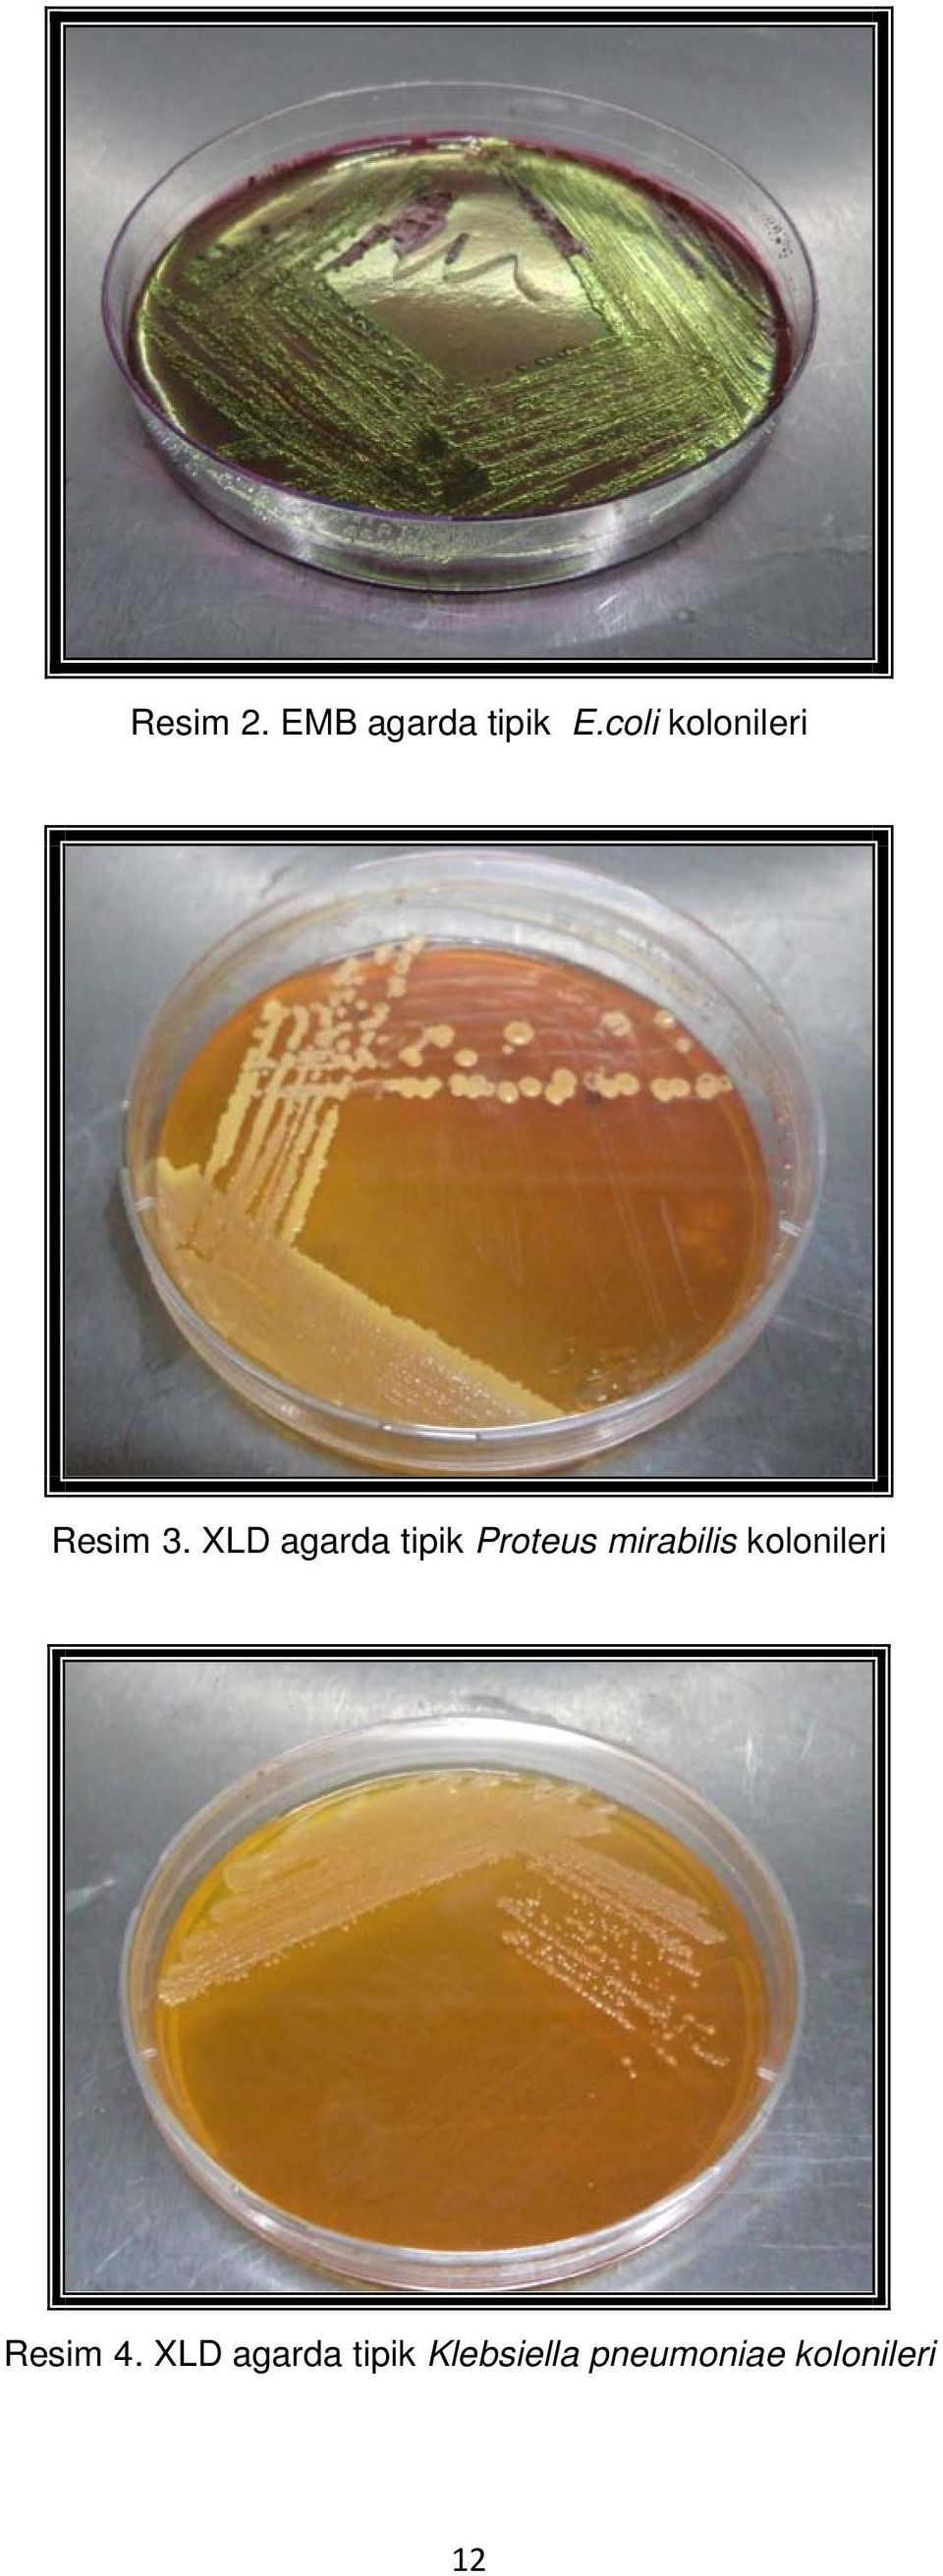 XLD agarda tipik Proteus mirabilis